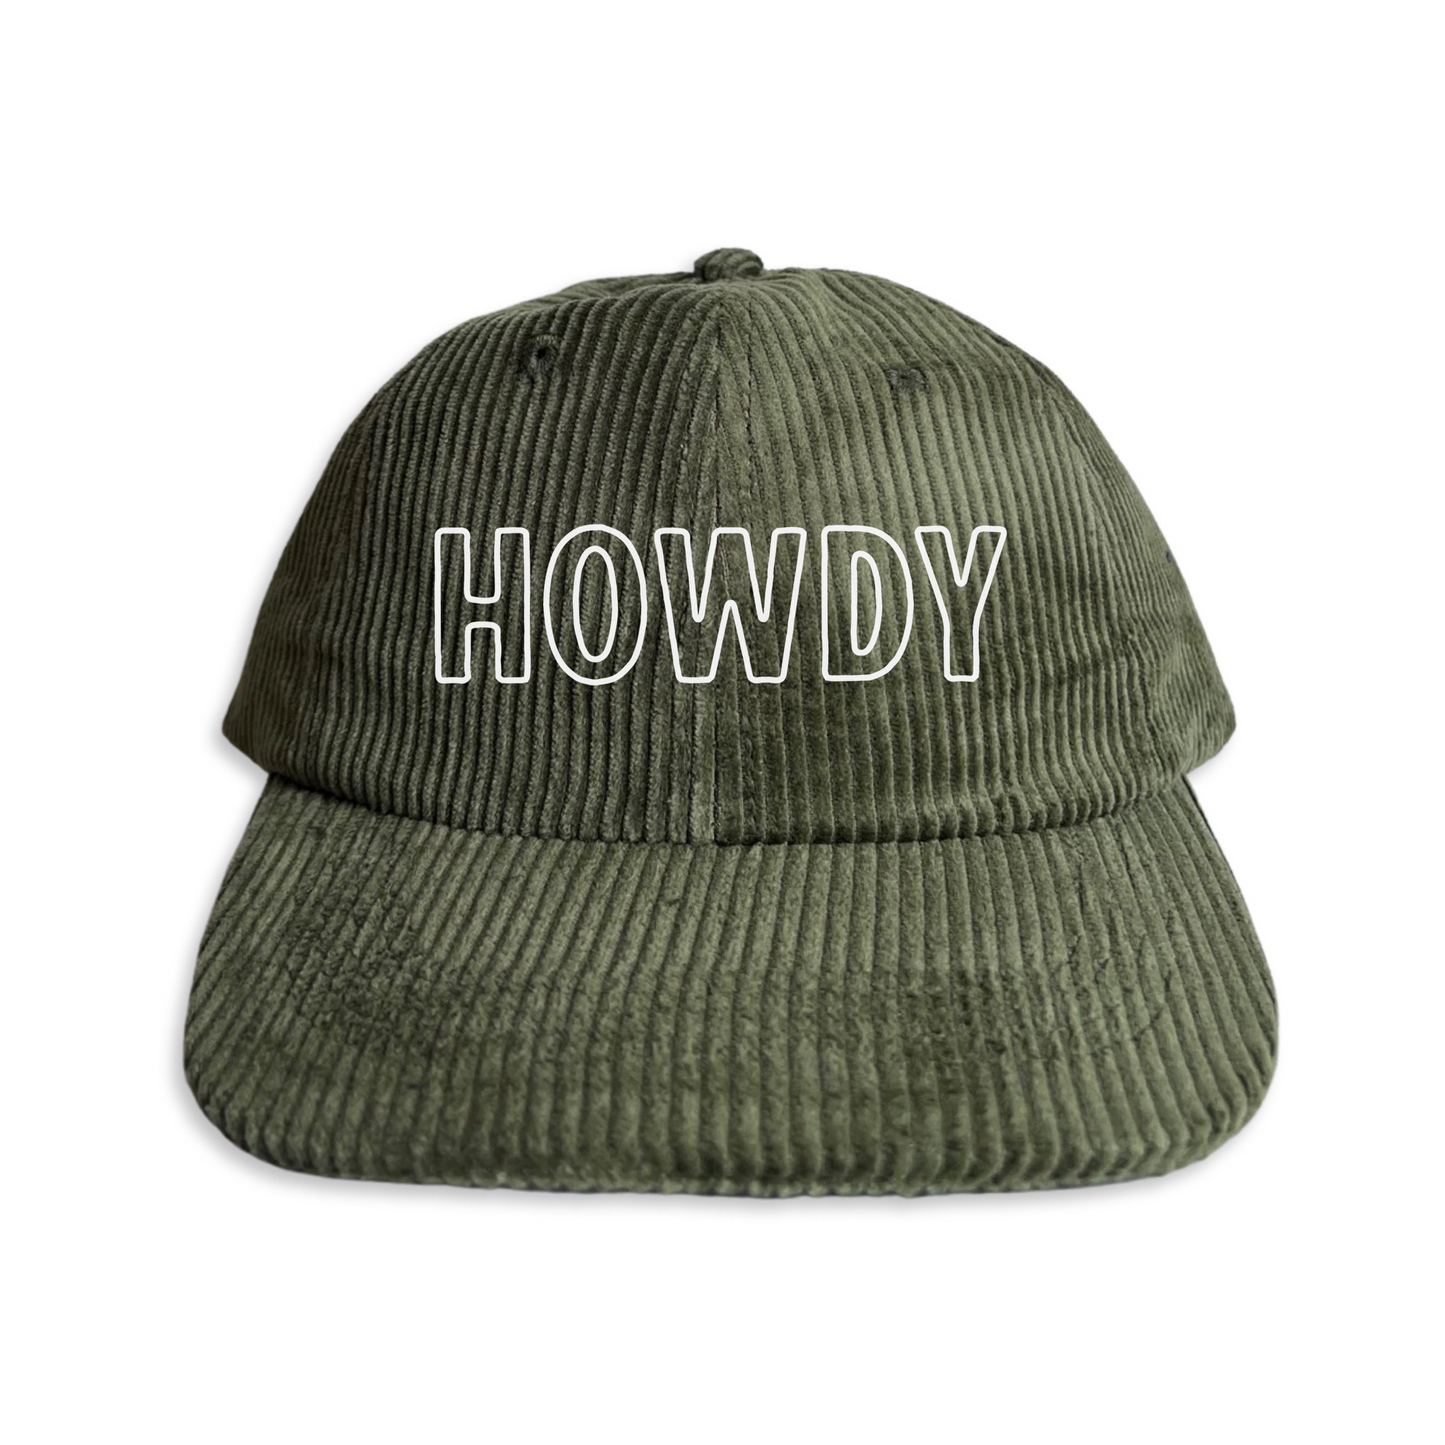 Howdy Outline Corduroy Cap